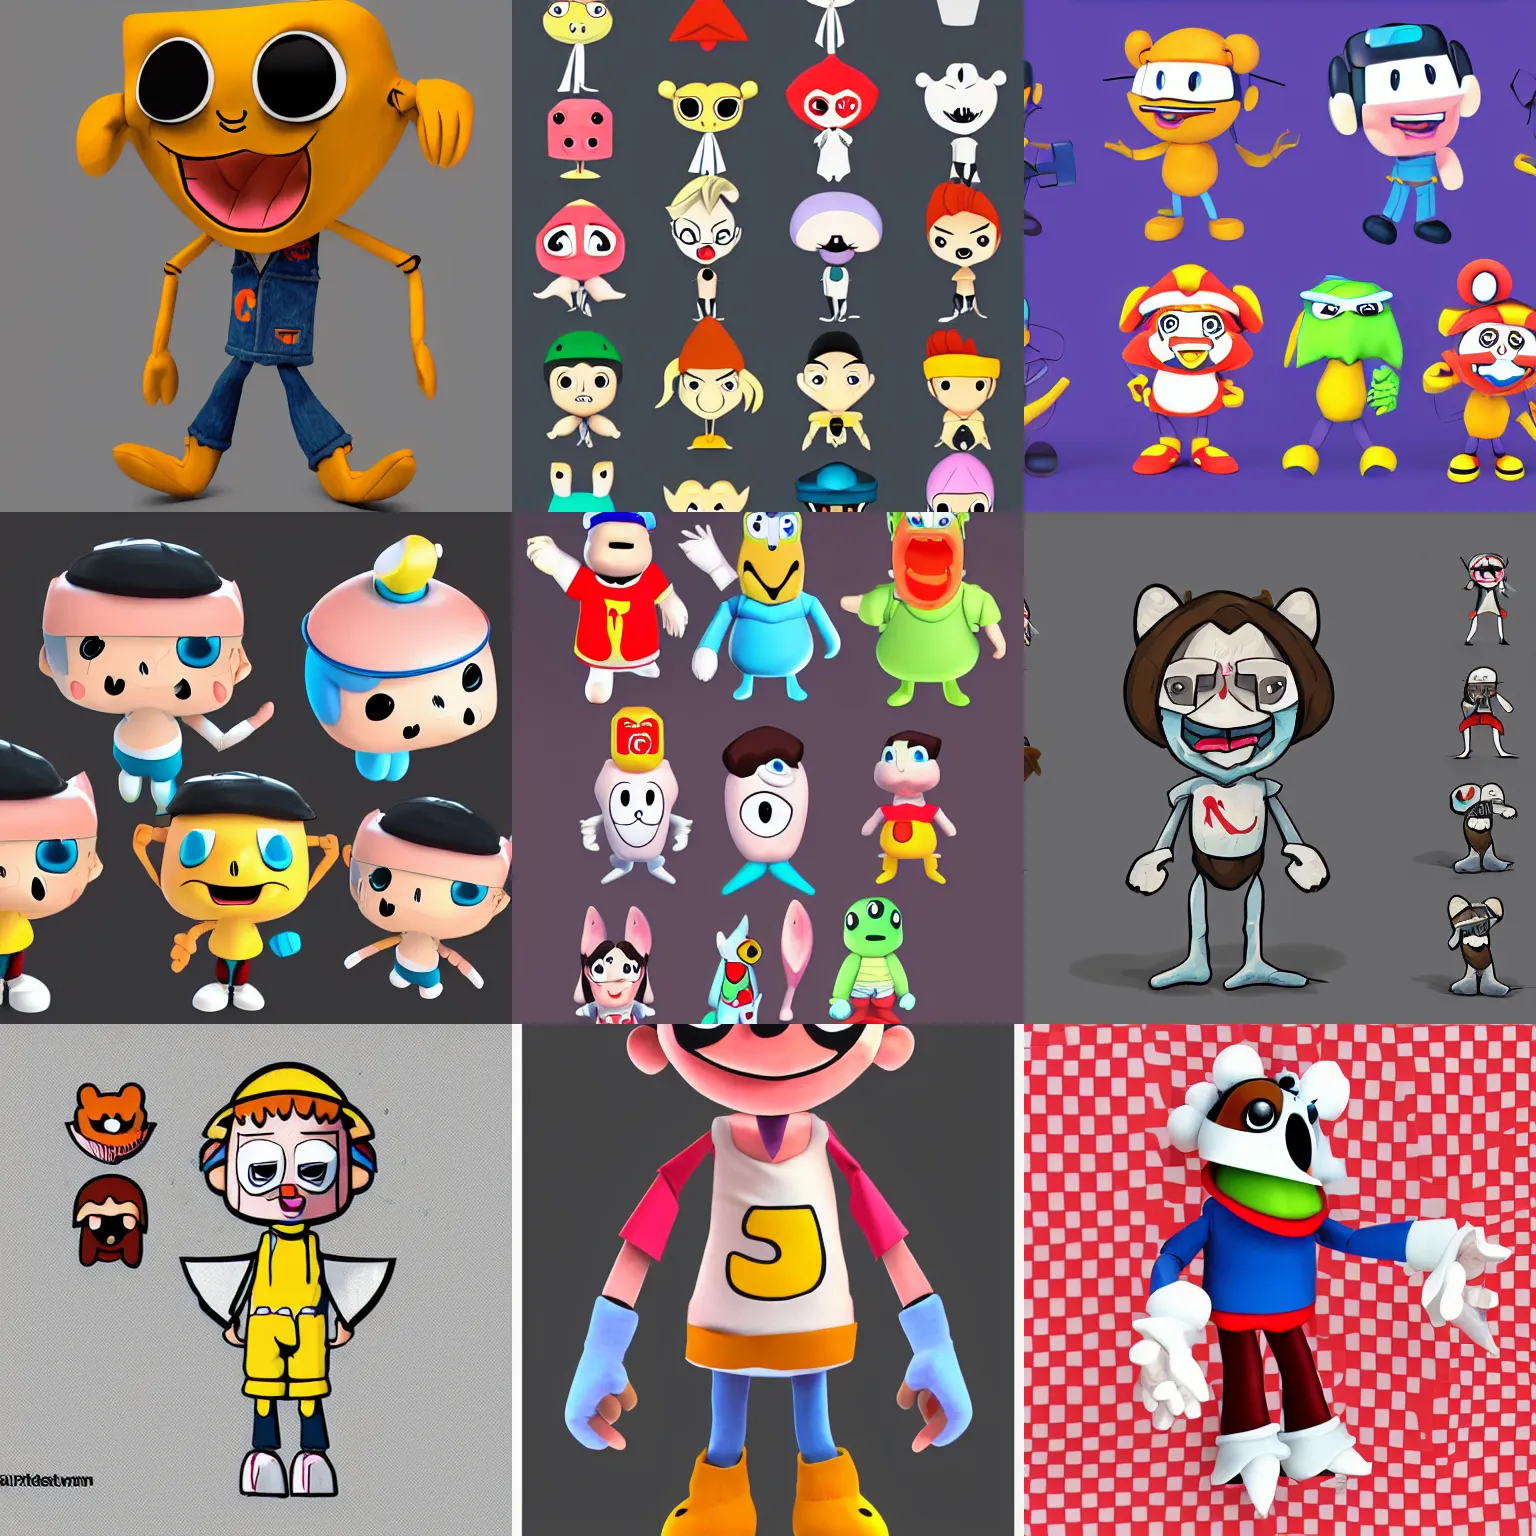 Prompt: cartoon character puppet mascot, cute, cartoon network, nintendo, nickelodeon, funko, digital art featured on artstation, fine lines, stylized,